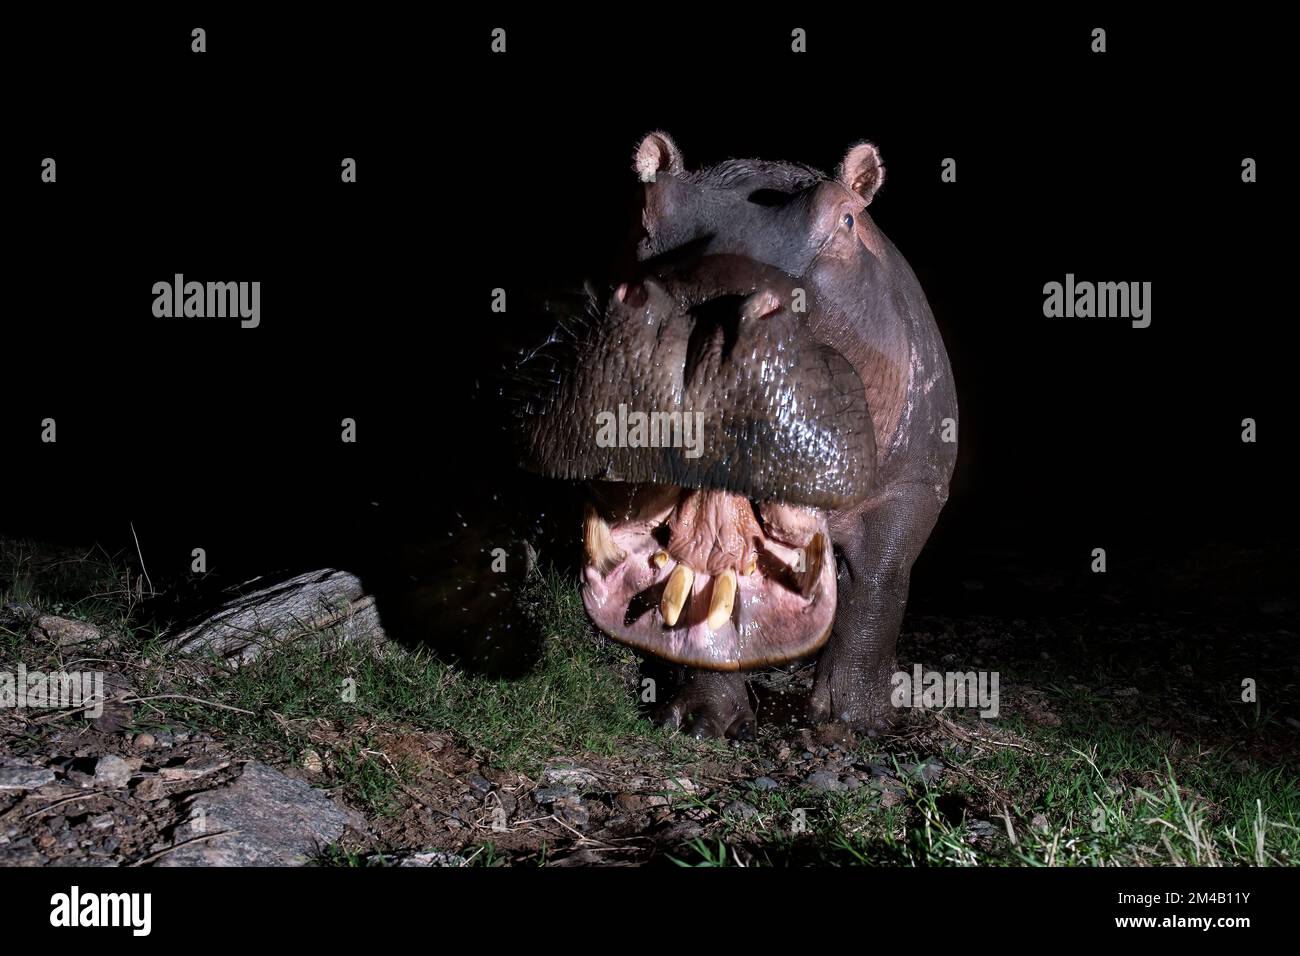 Hippo bull minaccia la macchina fotografica, Masai Mara, Olare Motorogi Conservancy, Kenya. Foto Stock